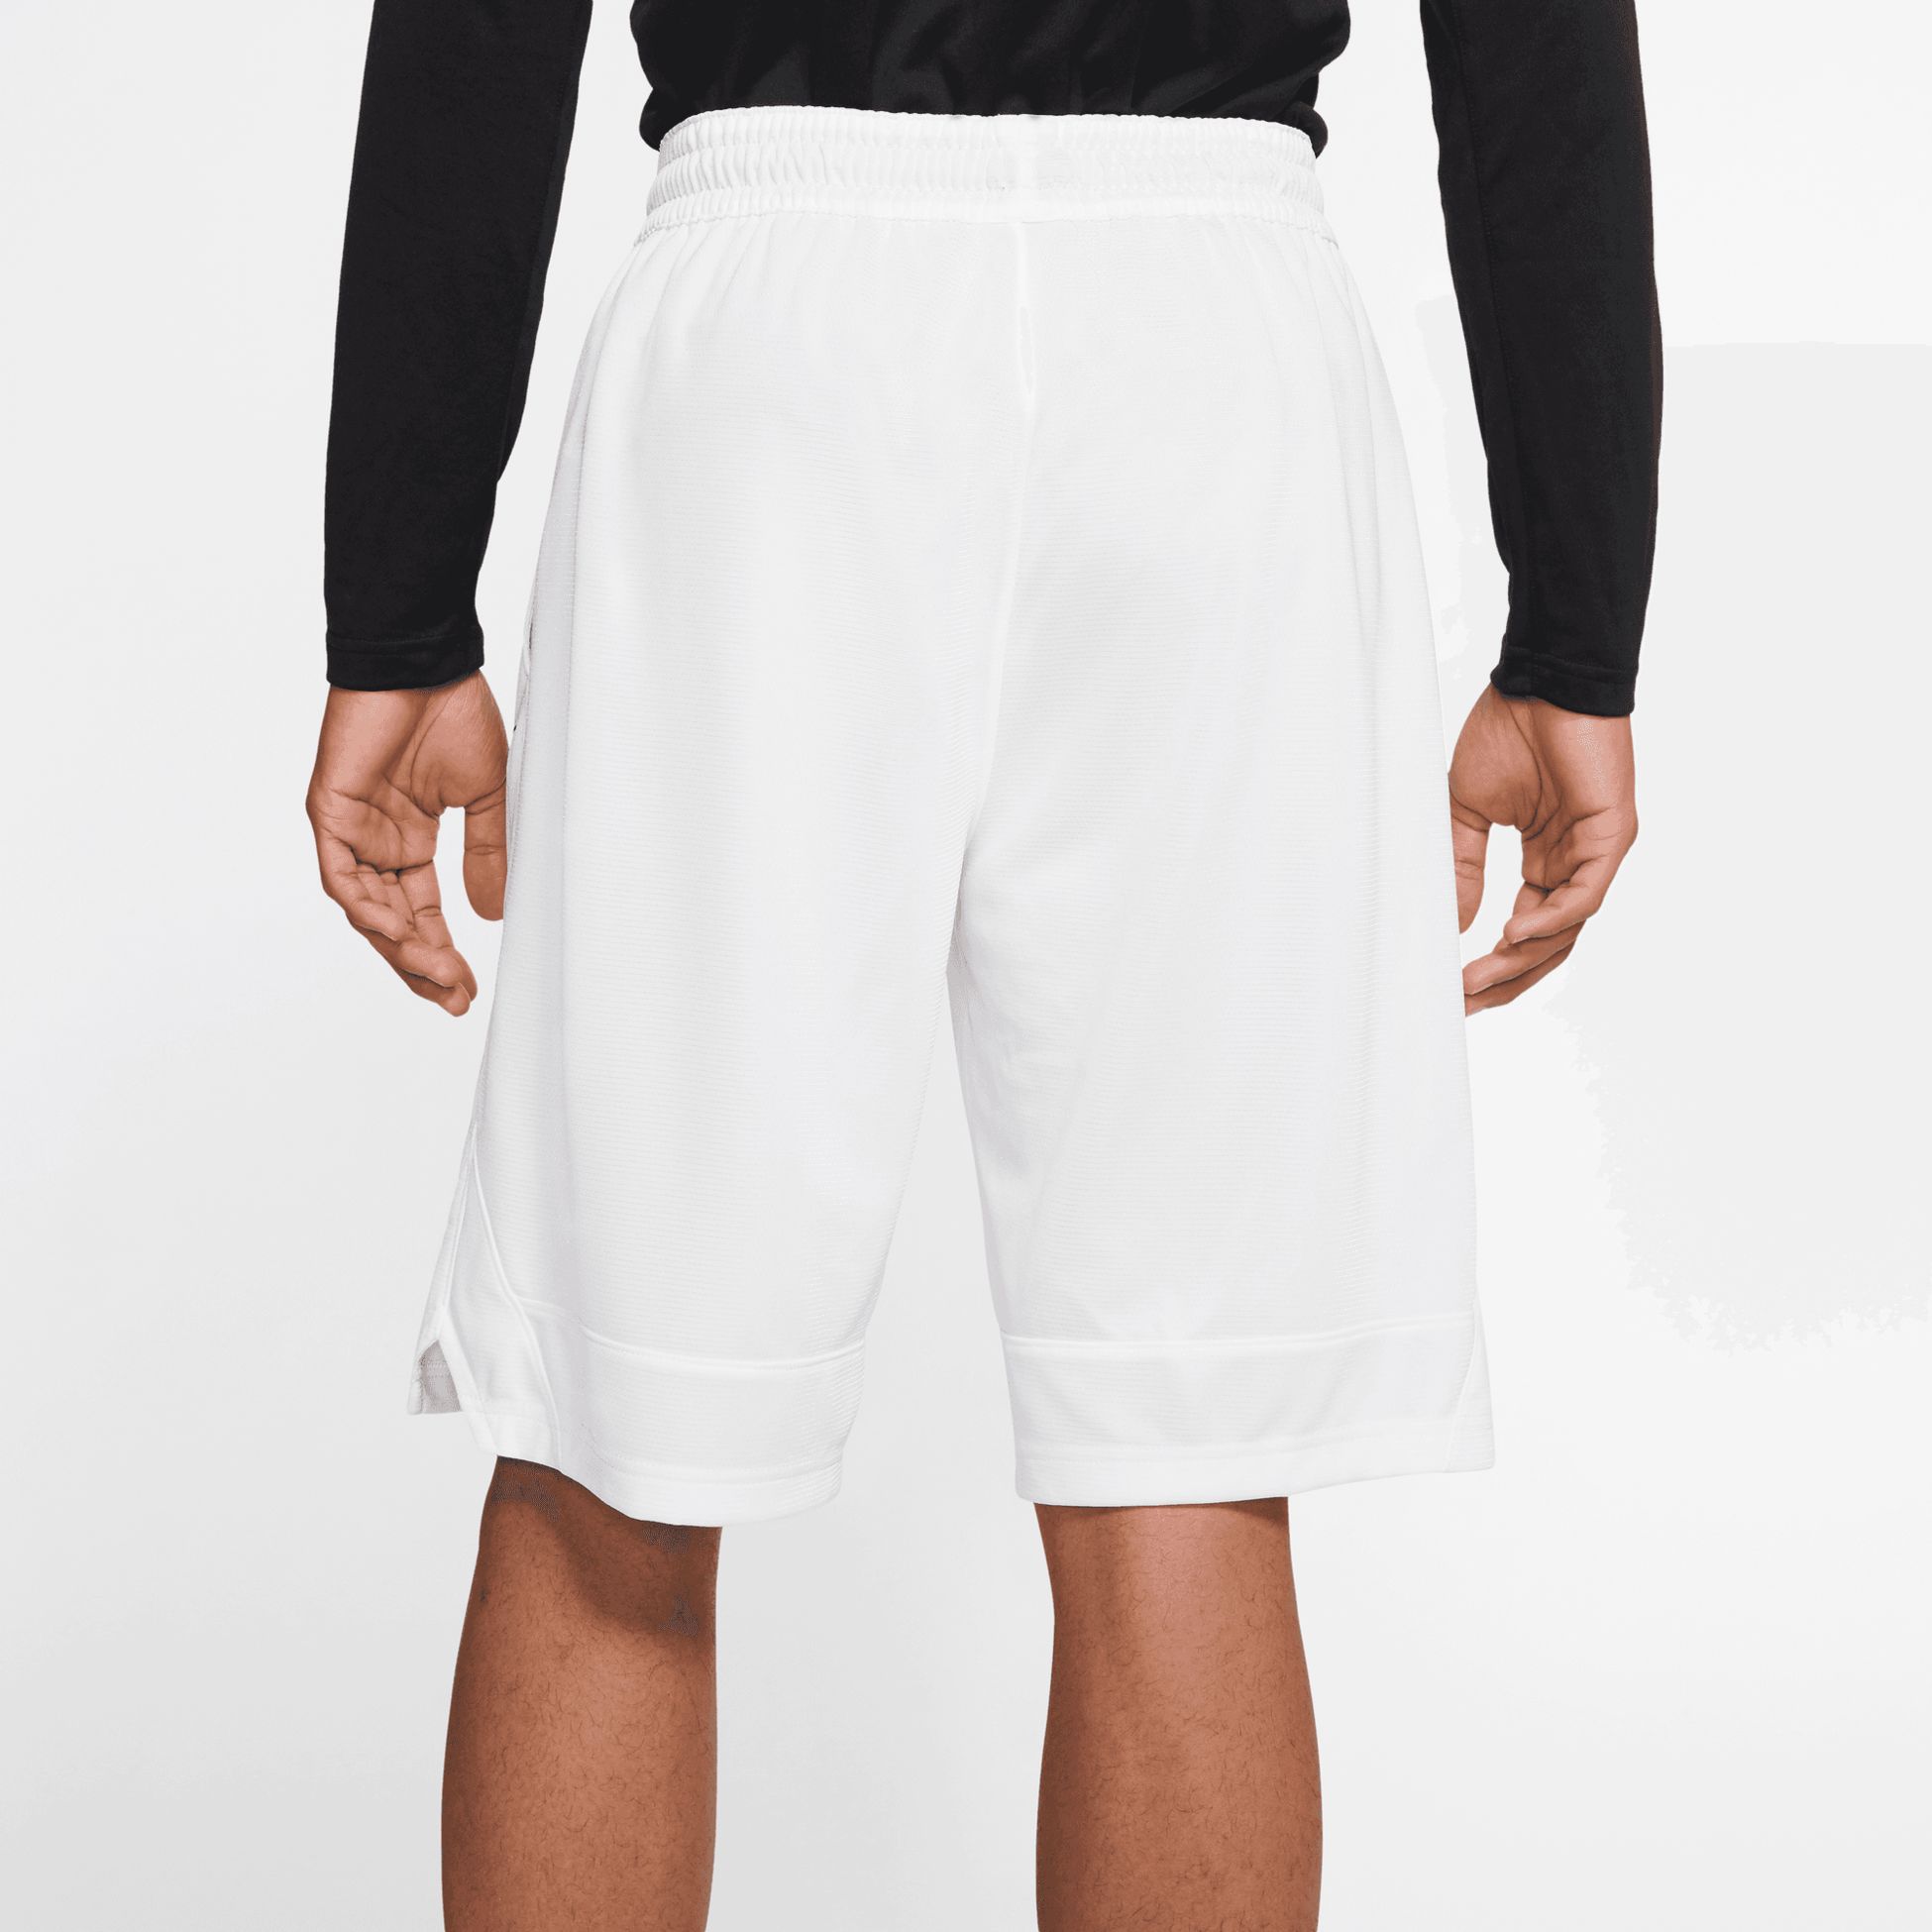 NIKE, Nike Dri-FIT Icon Men's Basketball